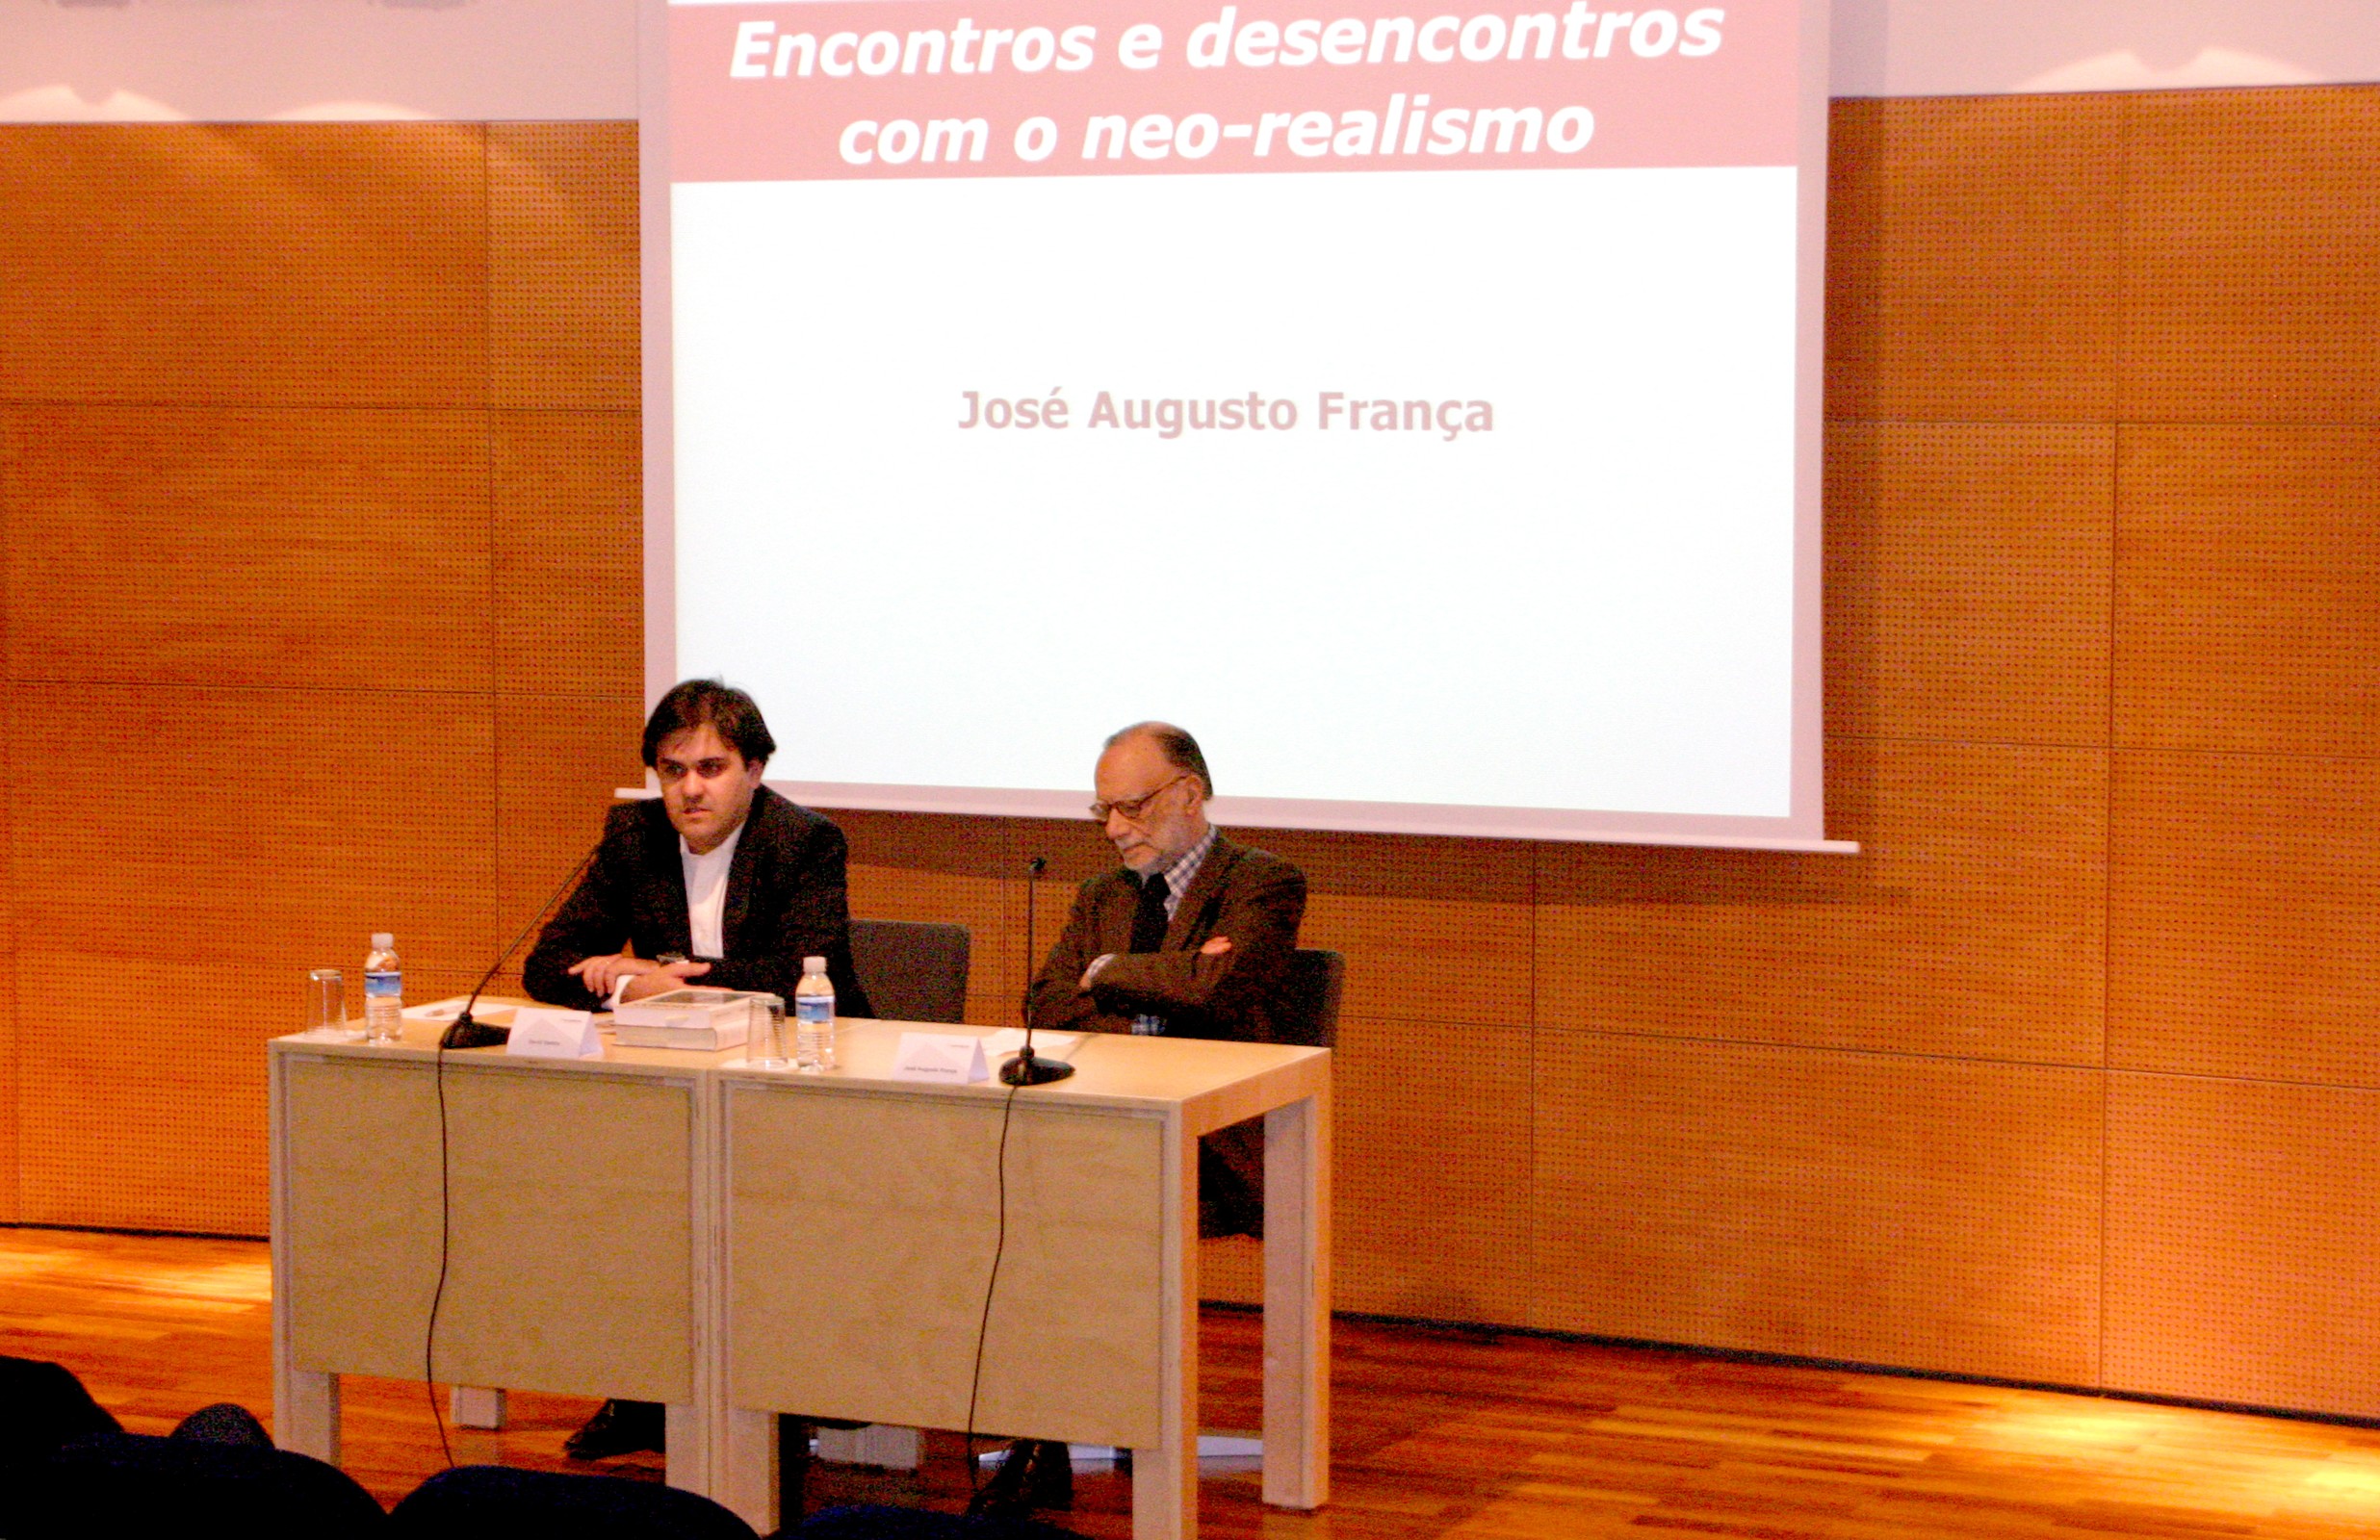 José Augusto França - 29 Mar 2008